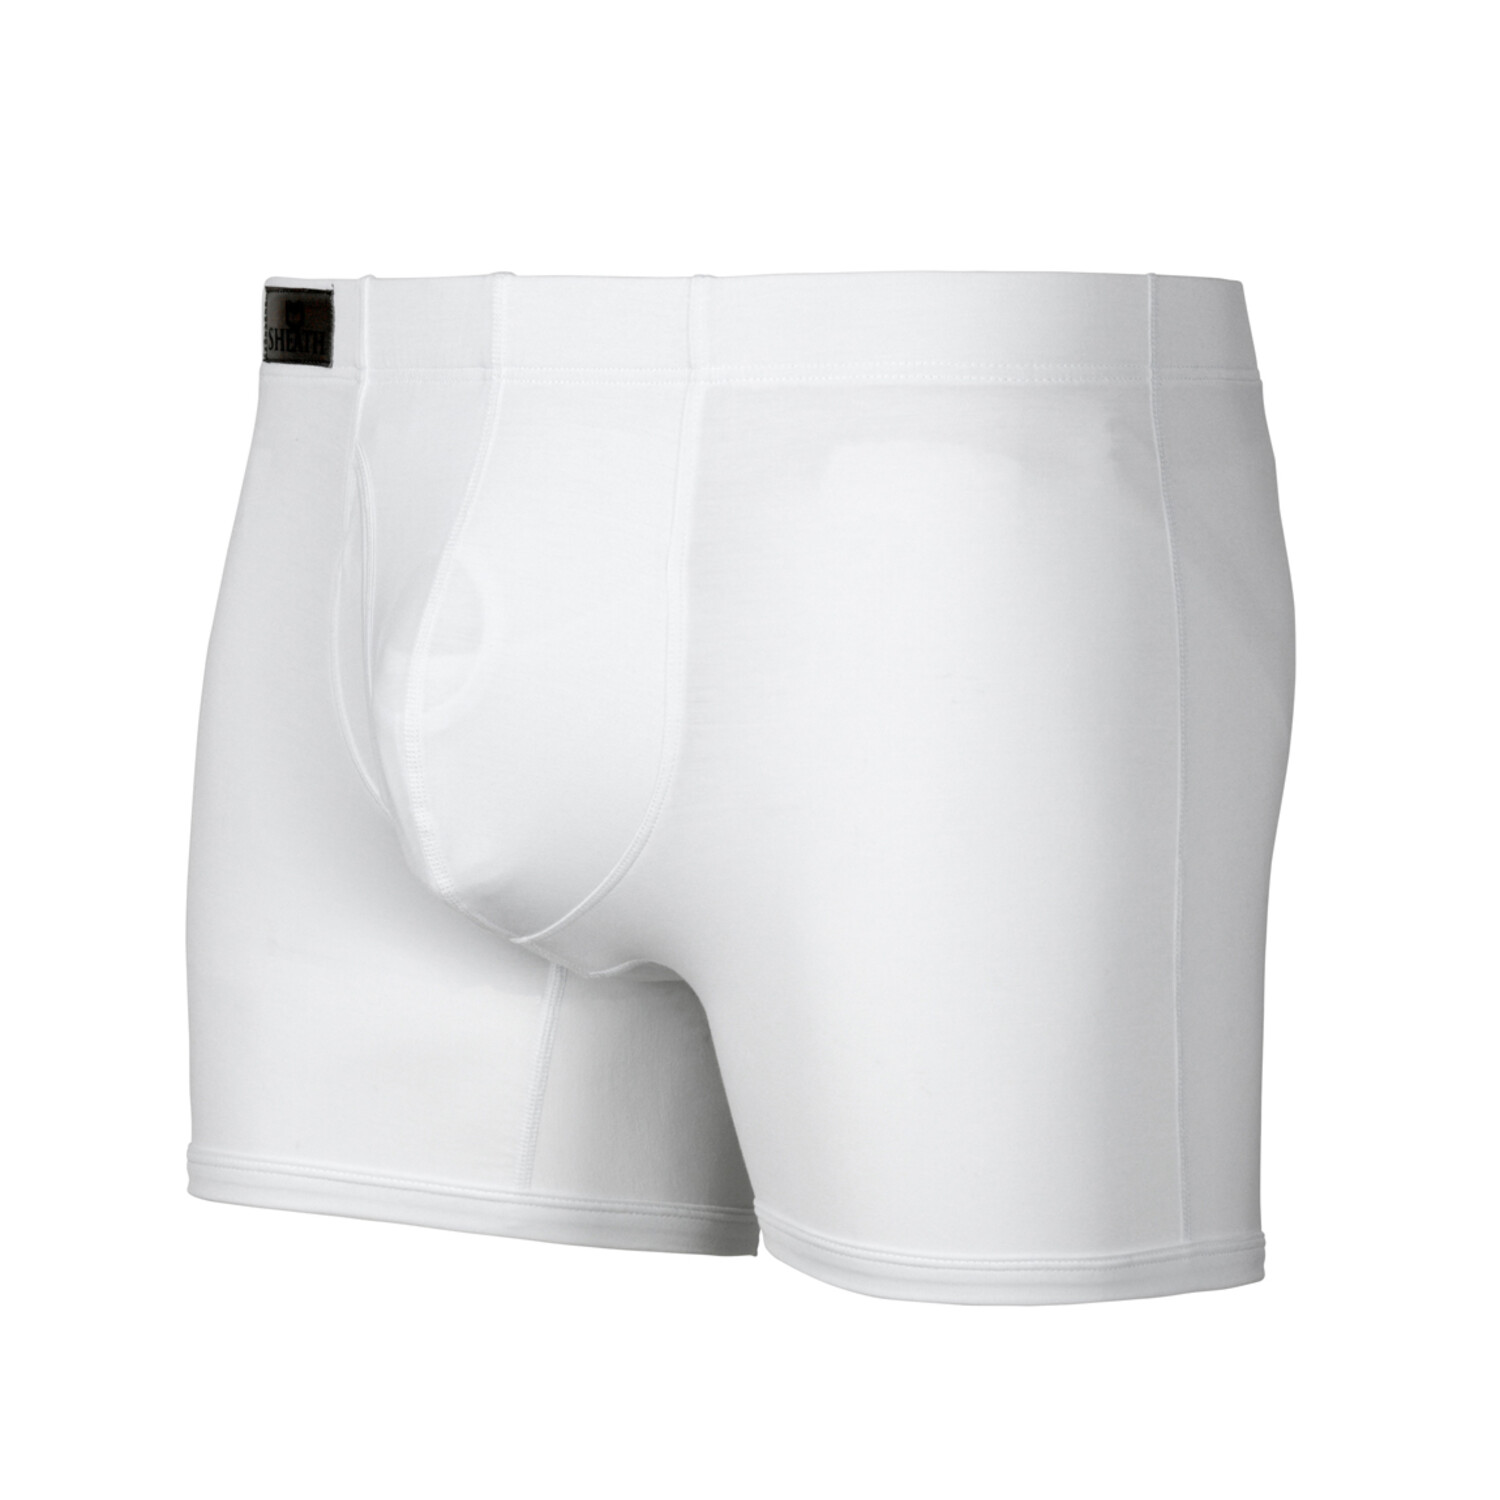 SHEATH 3.21 Men's Dual Pouch Boxer Brief // White (Large) - Sheath